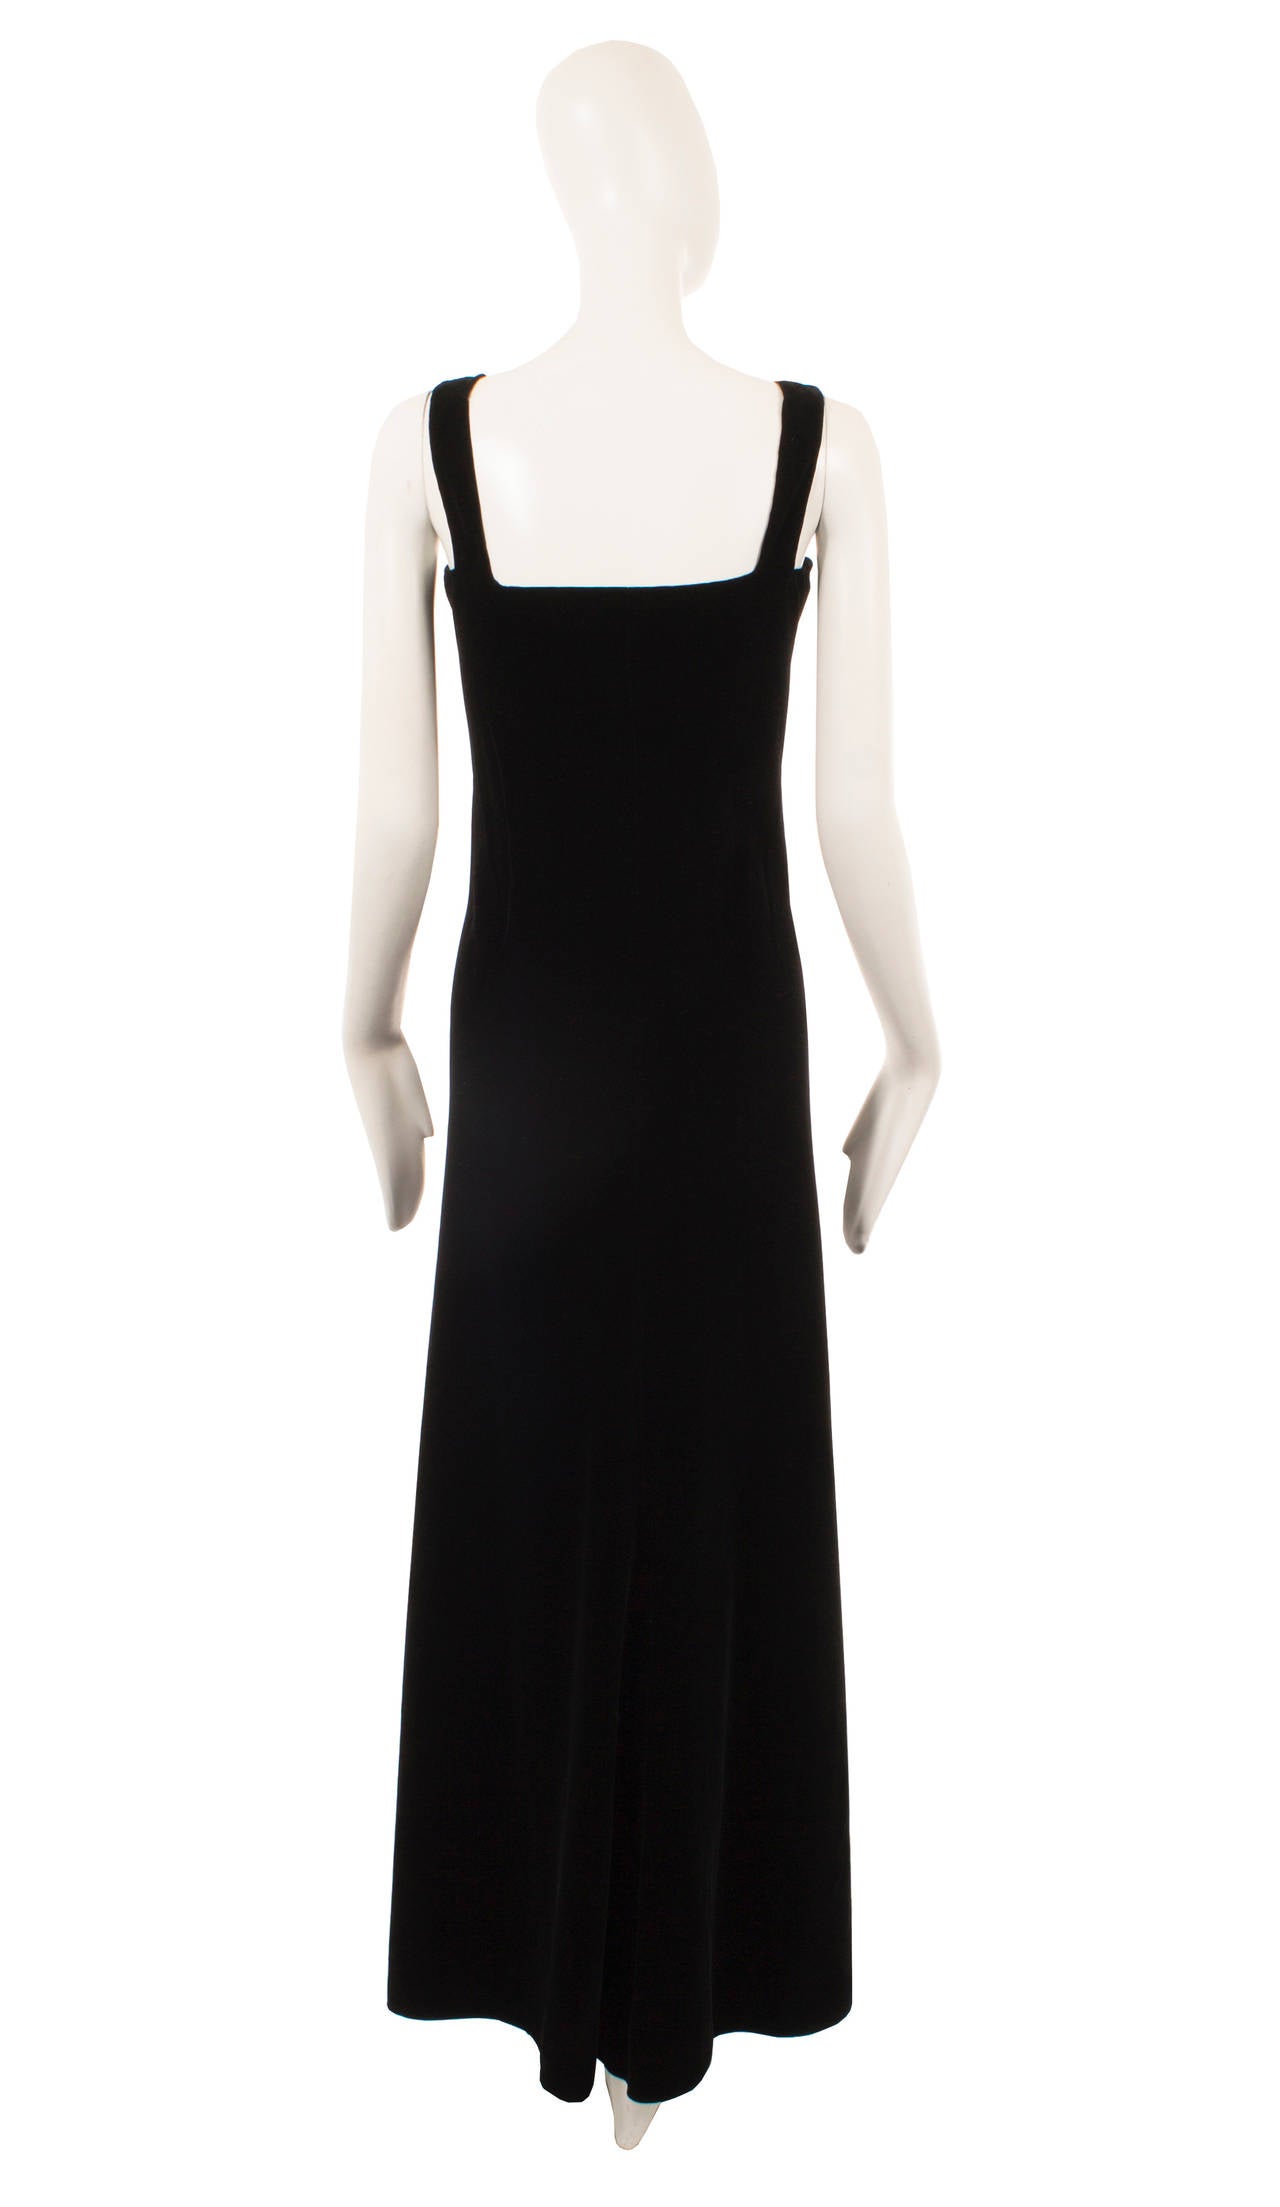 Lanvin haute couture black velvet dress, Autumn Winter 1933 In Excellent Condition For Sale In London, GB